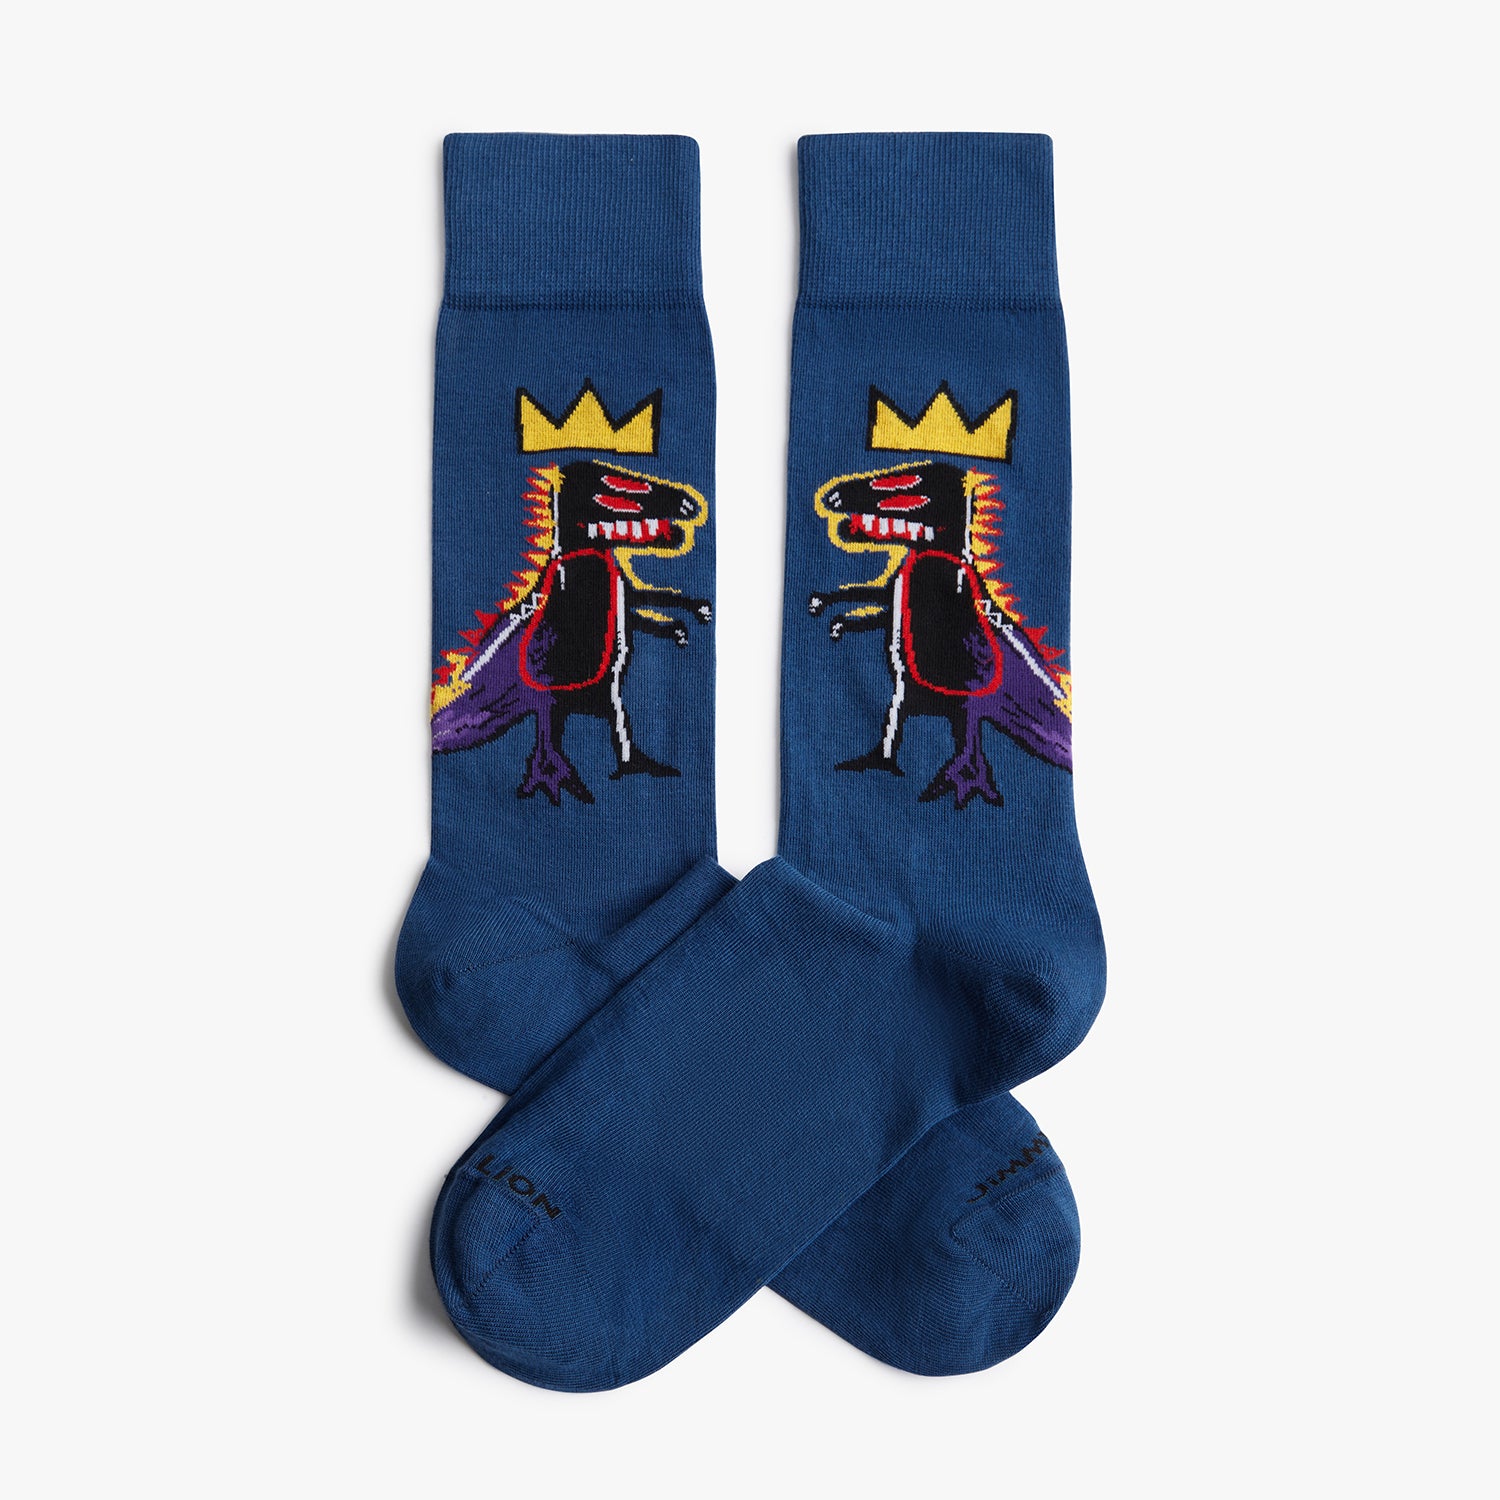 Cool & Unique Socks Online for Men, Women & Kids